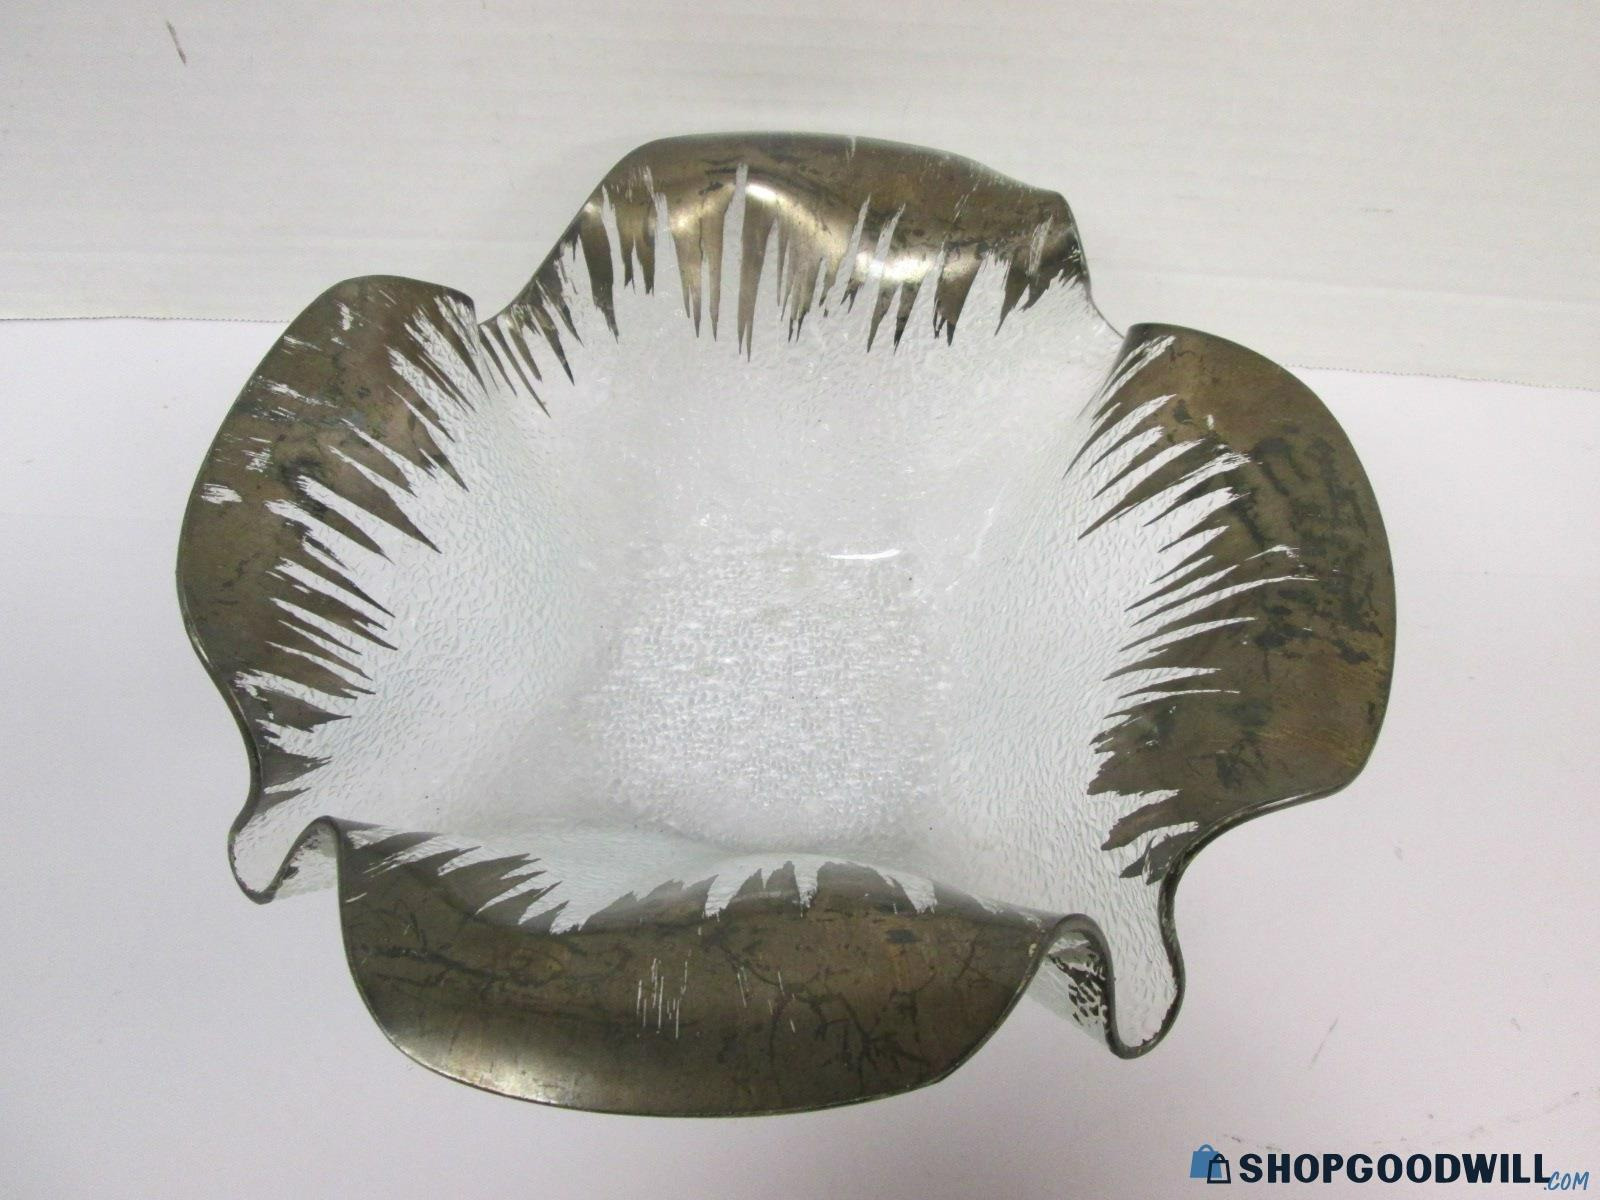 DOROTHY THORPE MCM Handkerchief Bowl Bead Glass Vintage Atomic Modern Silver